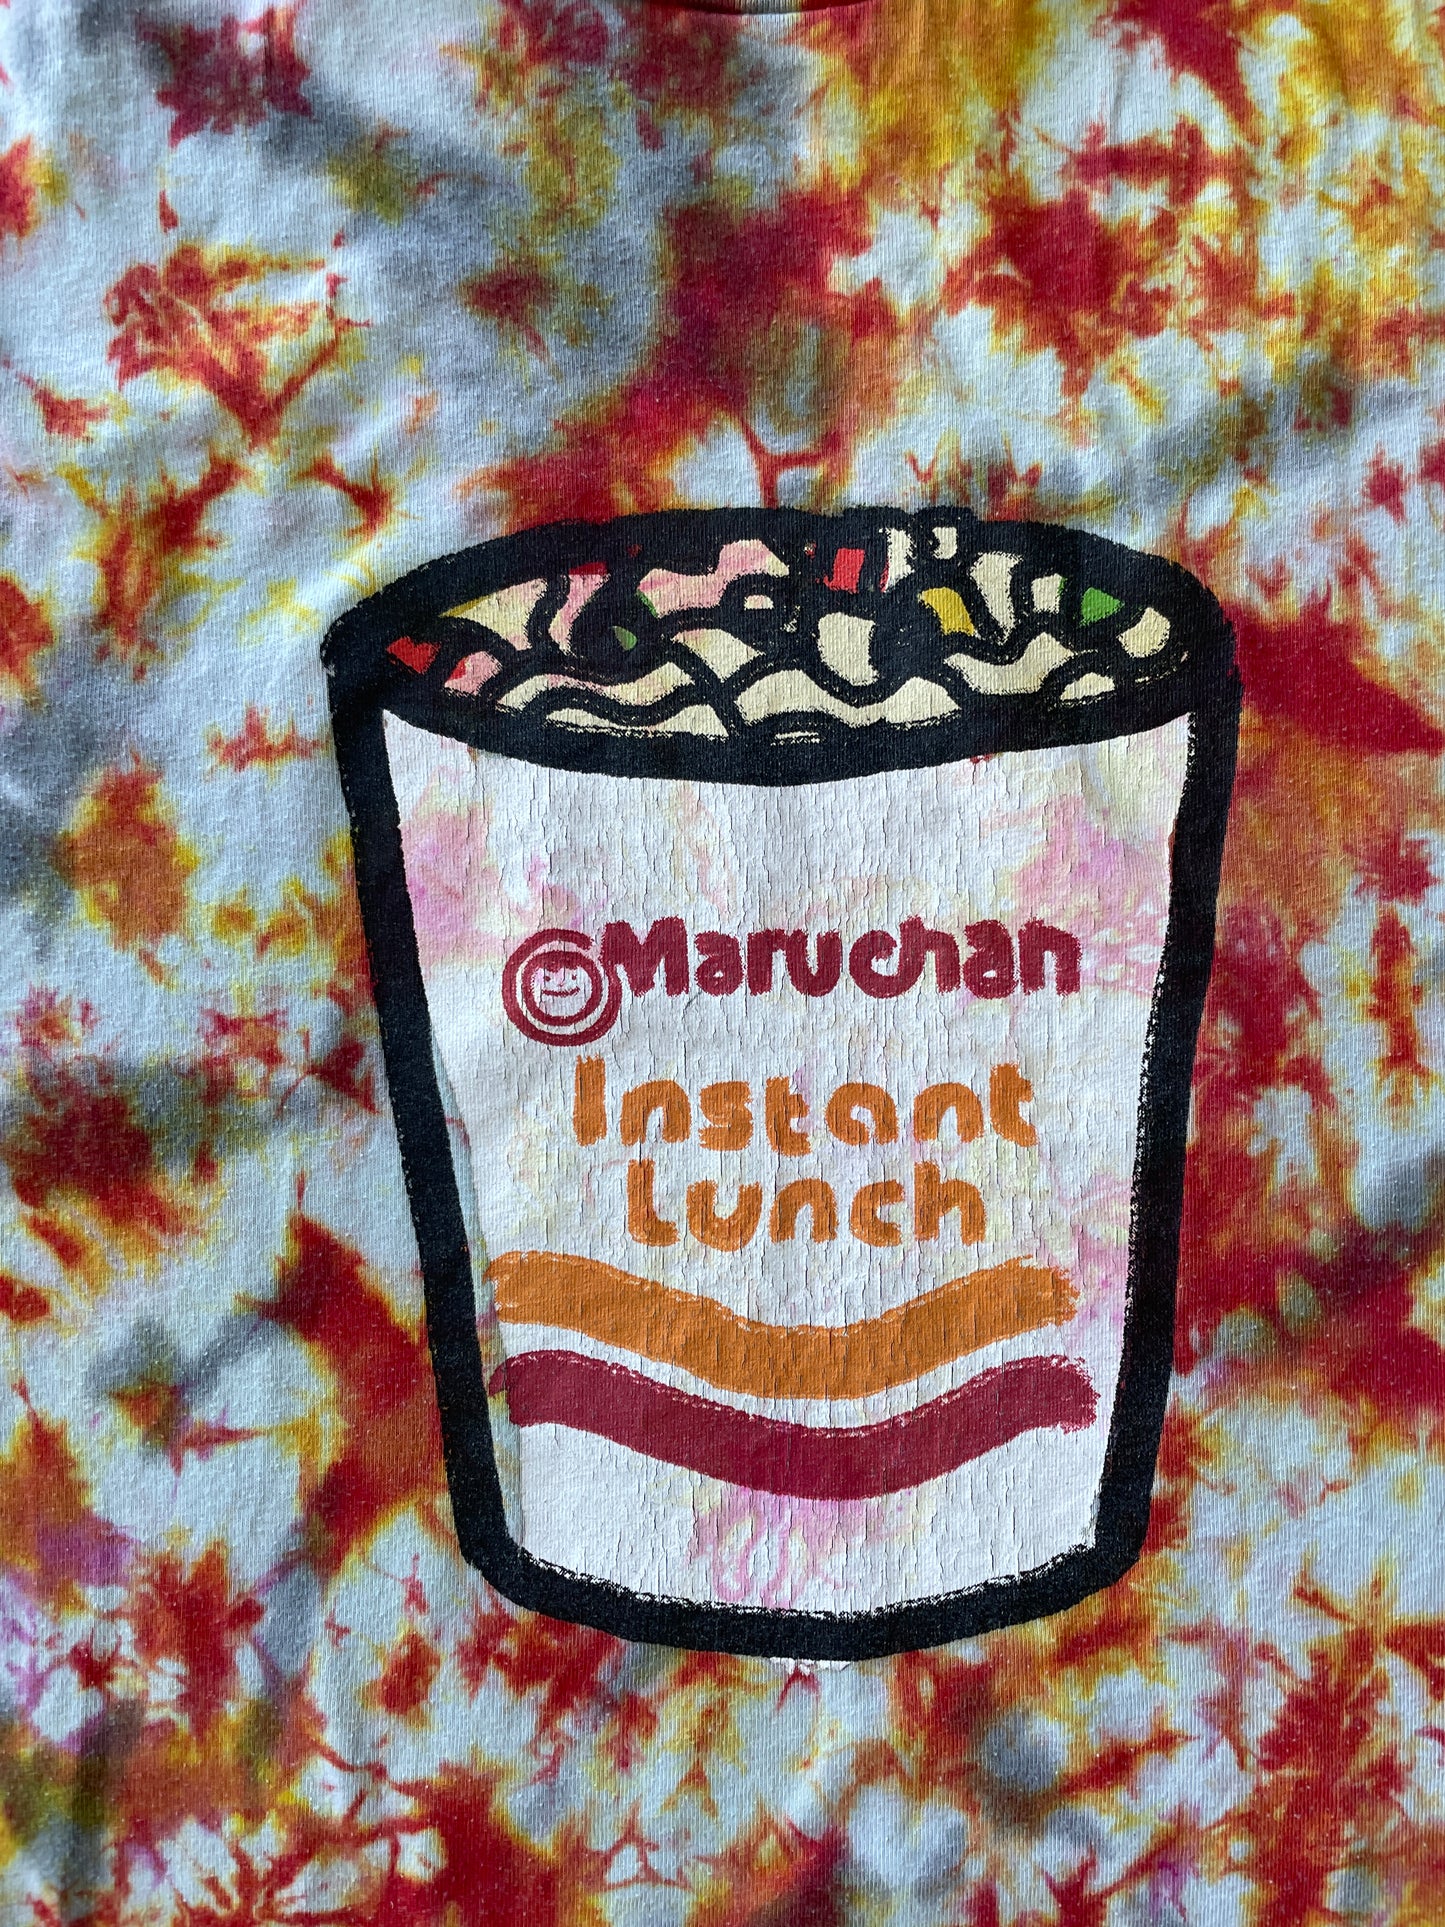 MEDIUM Men’s Maruchan Ramen Instant Lunch Handmade Tie Dye T-Shirt | One-Of-a-Kind Red, Yellow, and Orange Short Sleeve